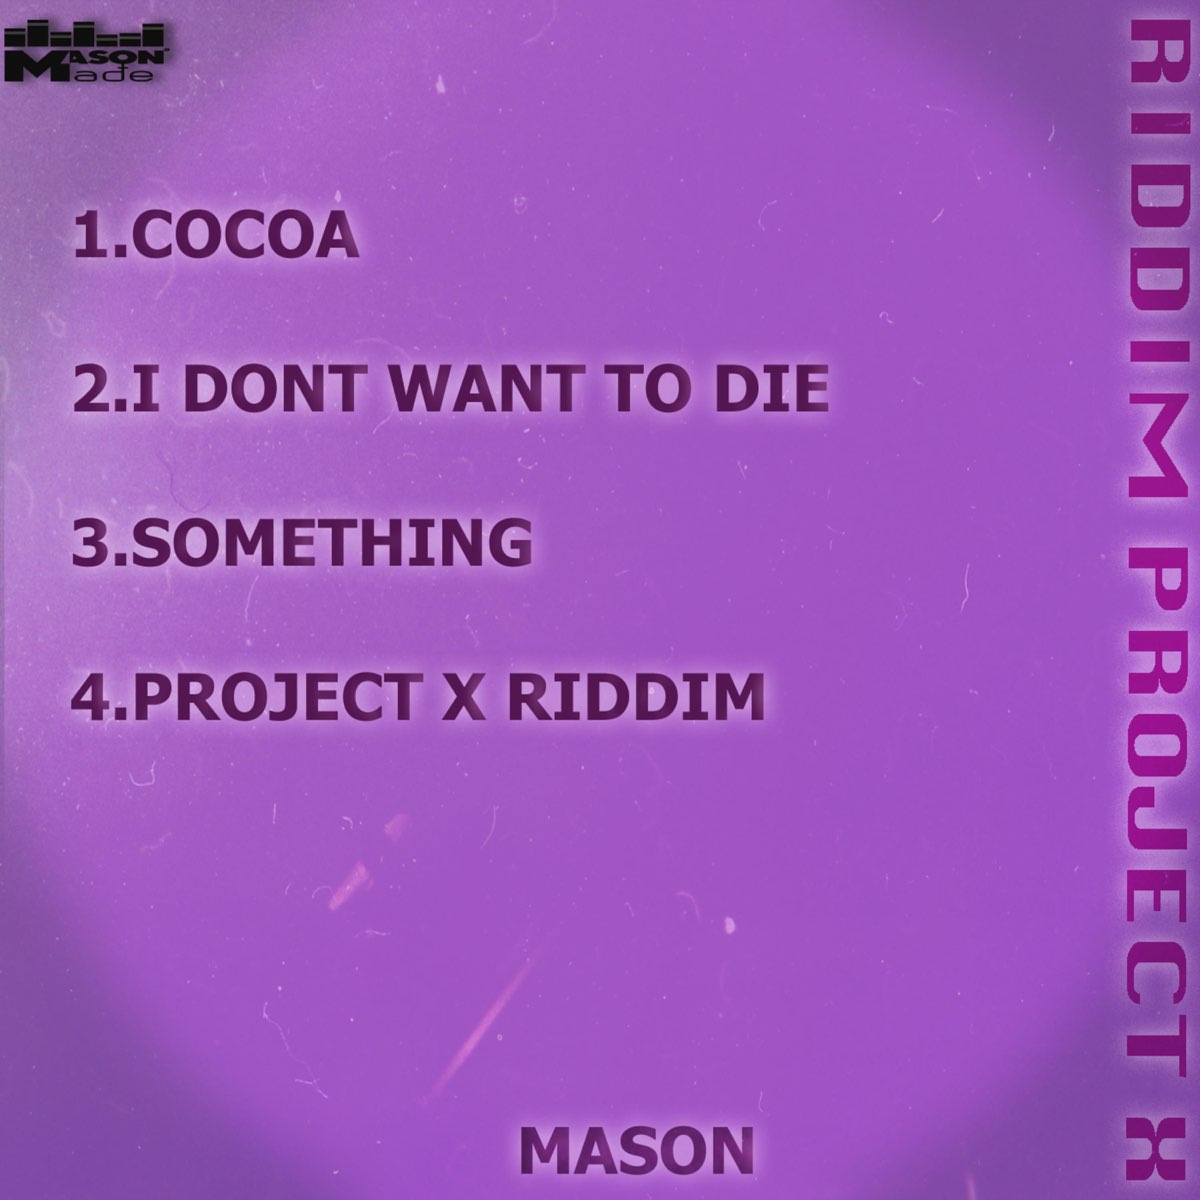 ‎Project X Riddim - EP - Album by Mason made - Apple Music